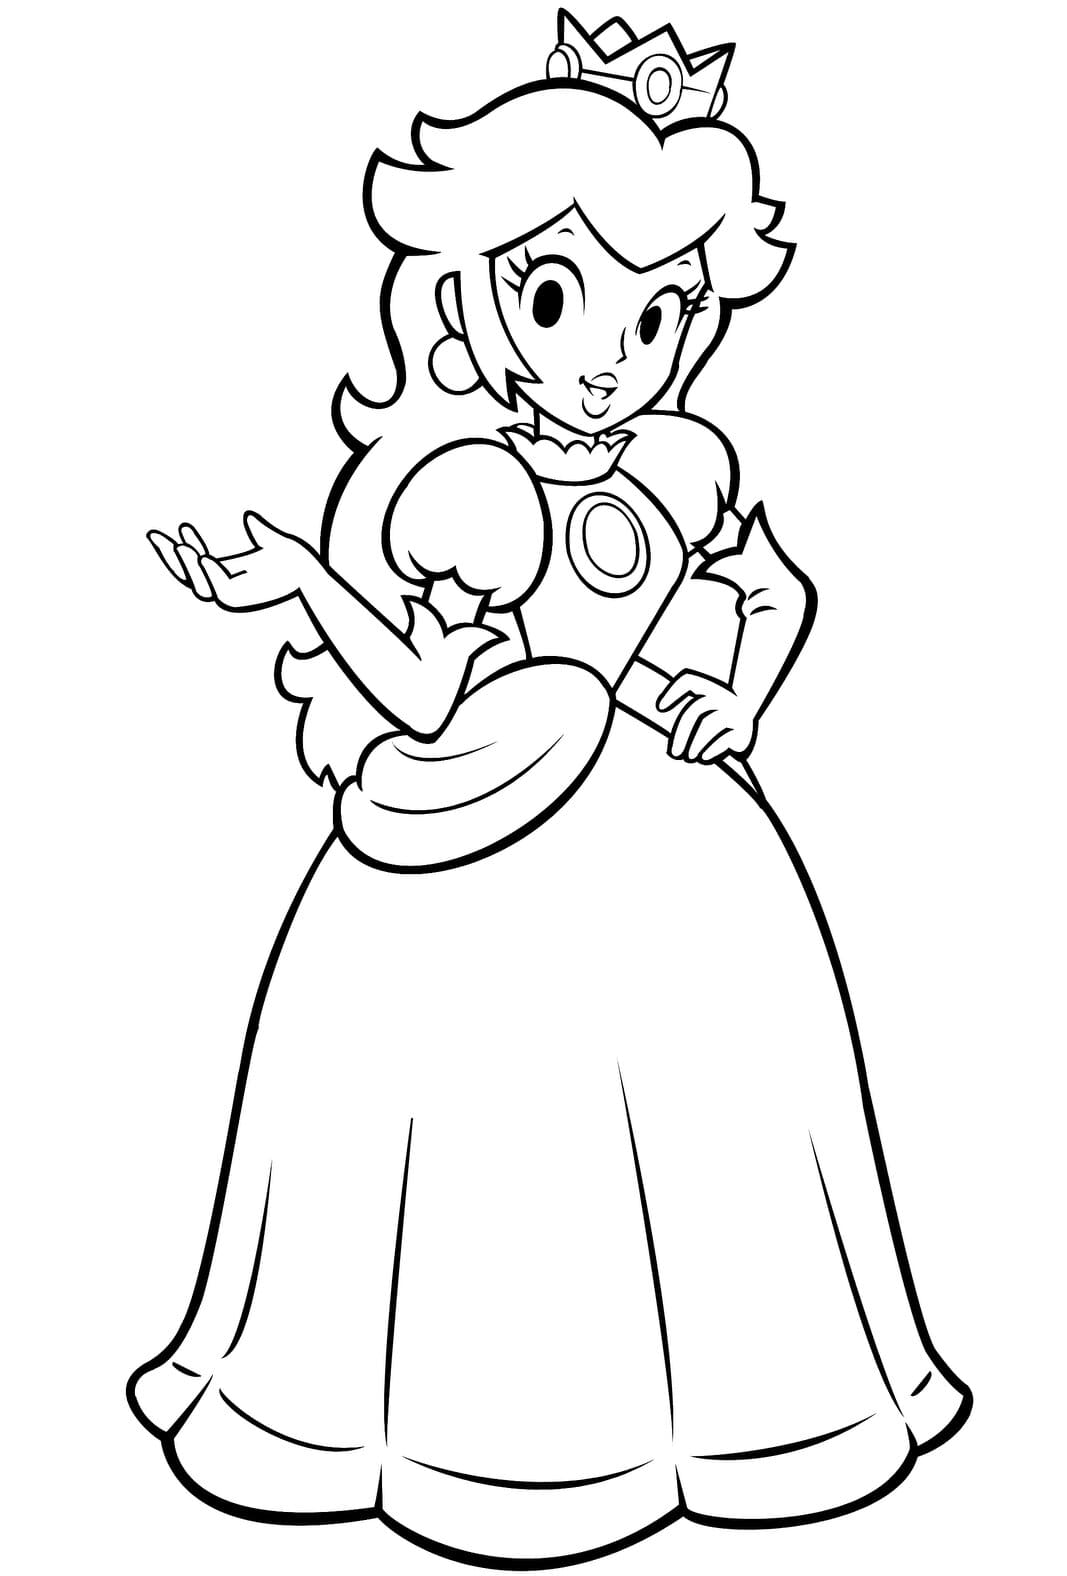 La princesse Peach lève la main droite dans Super Mario Bros de Princess Peach